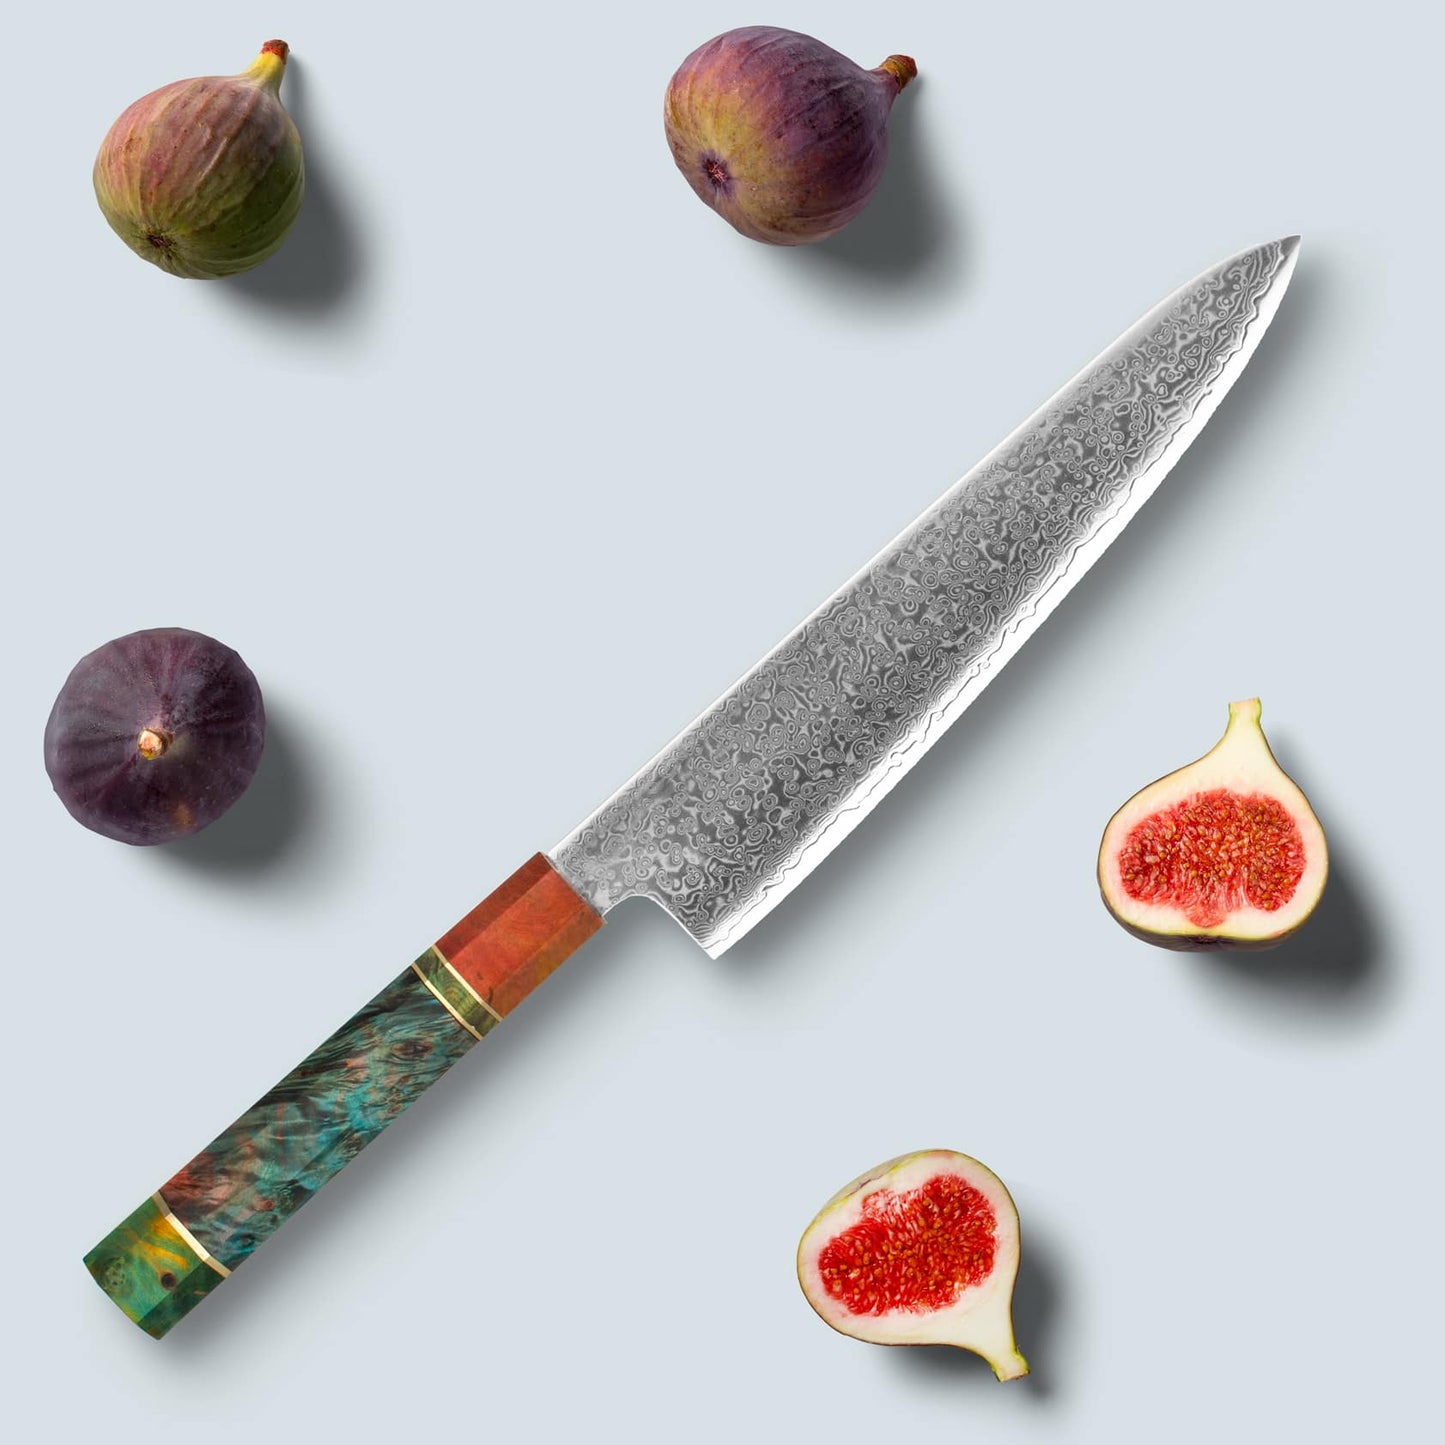 Ichika (いち か か) cuțit de oțel Damasc cu mâner octogonal colorat